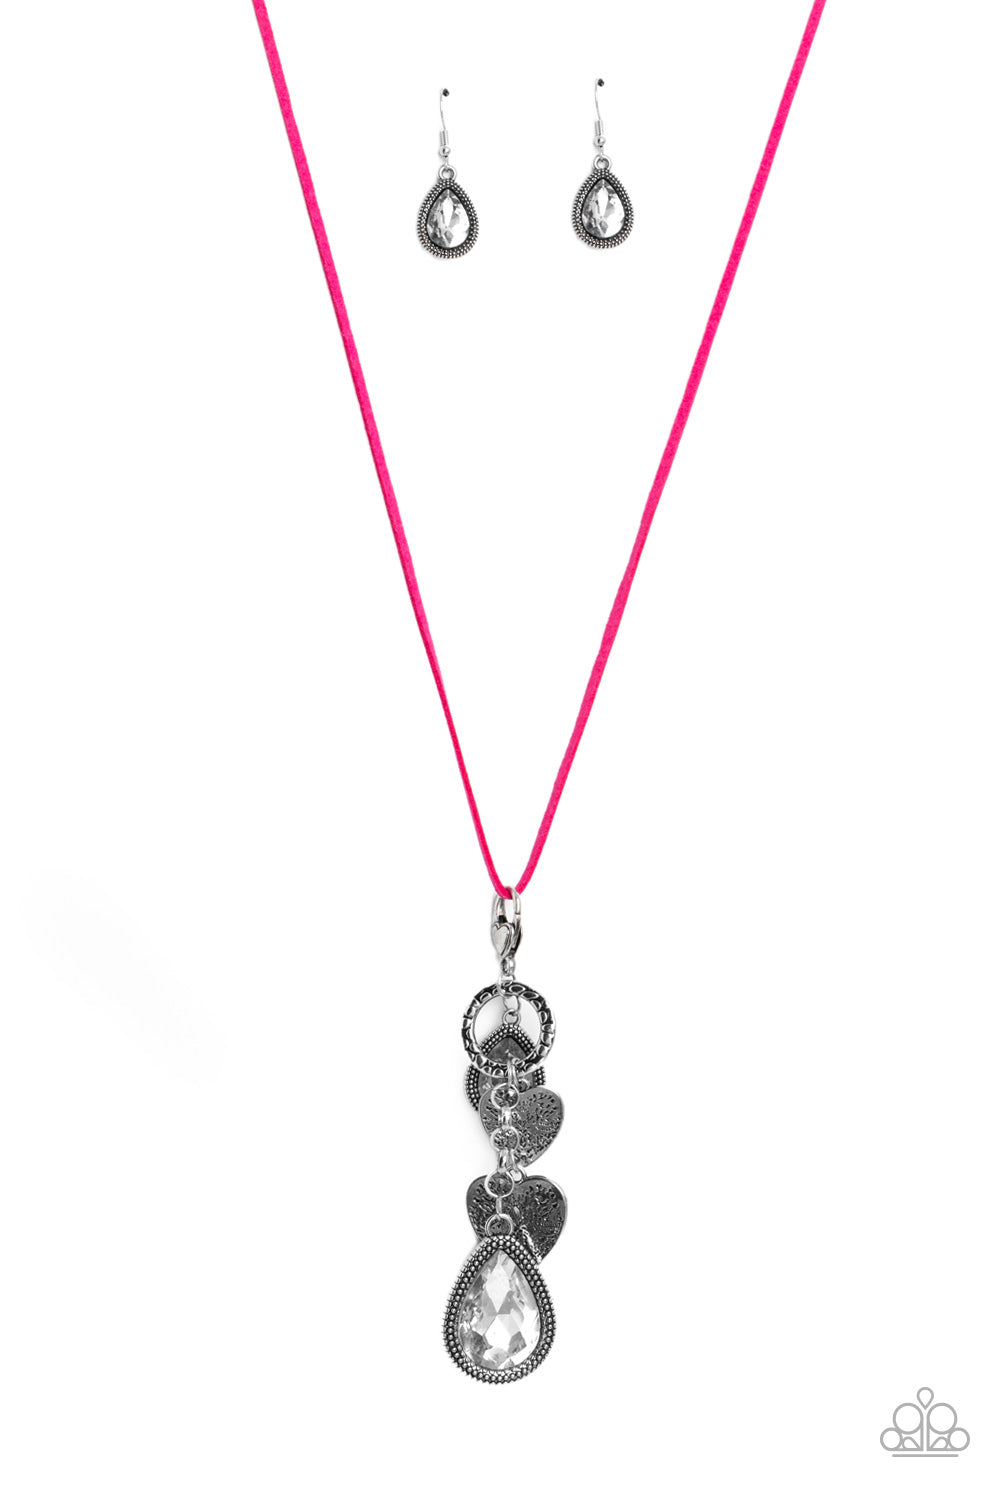 five-dollar-jewelry-casanova-clique-pink-necklace-paparazzi-accessories